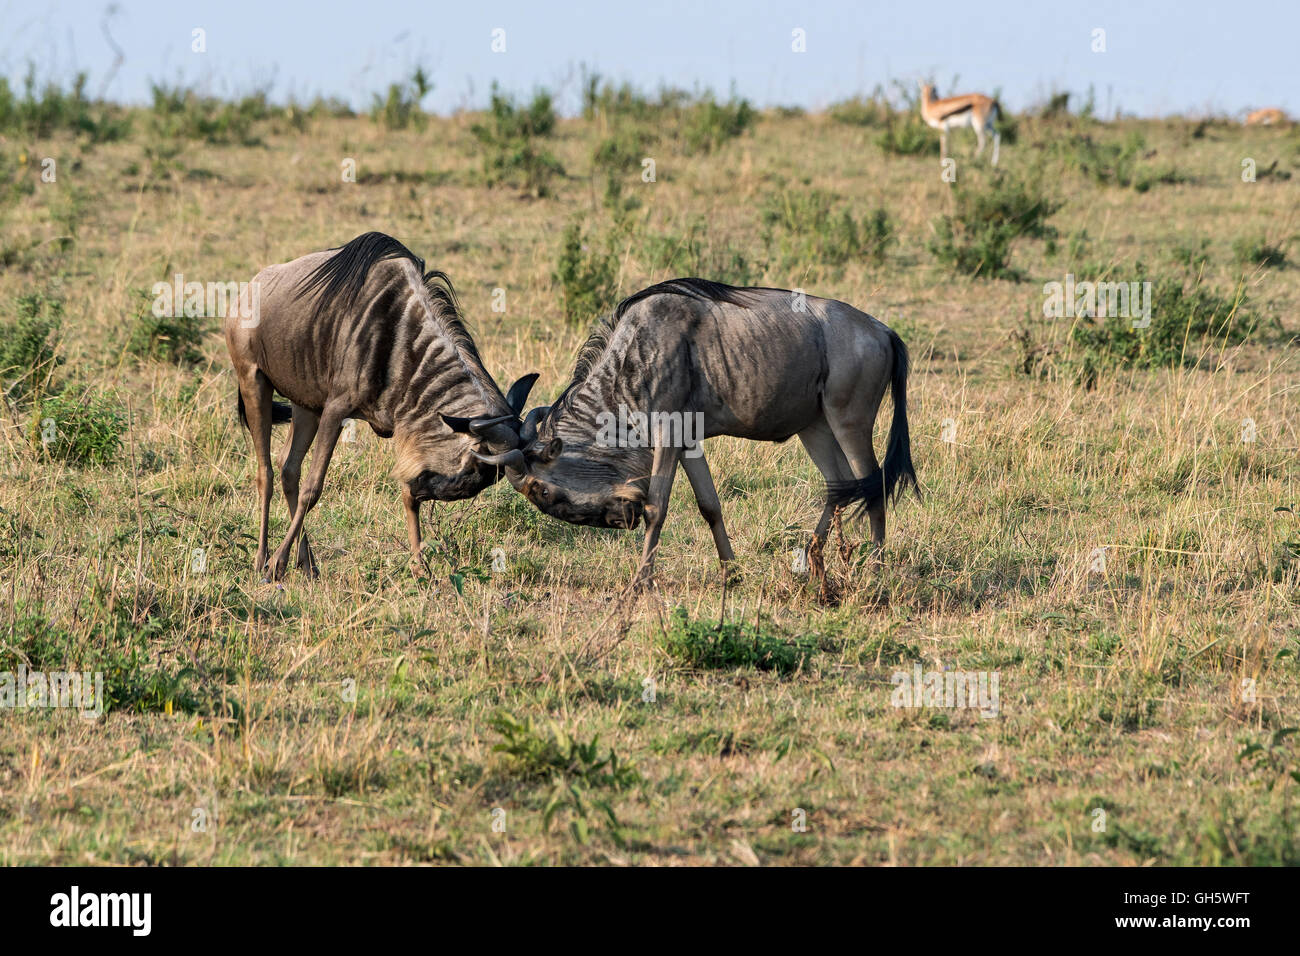 Tanzania, Ngorongoro Conservation Area, fighting Wildebeests, Connochaetes taurinus Stock Photo